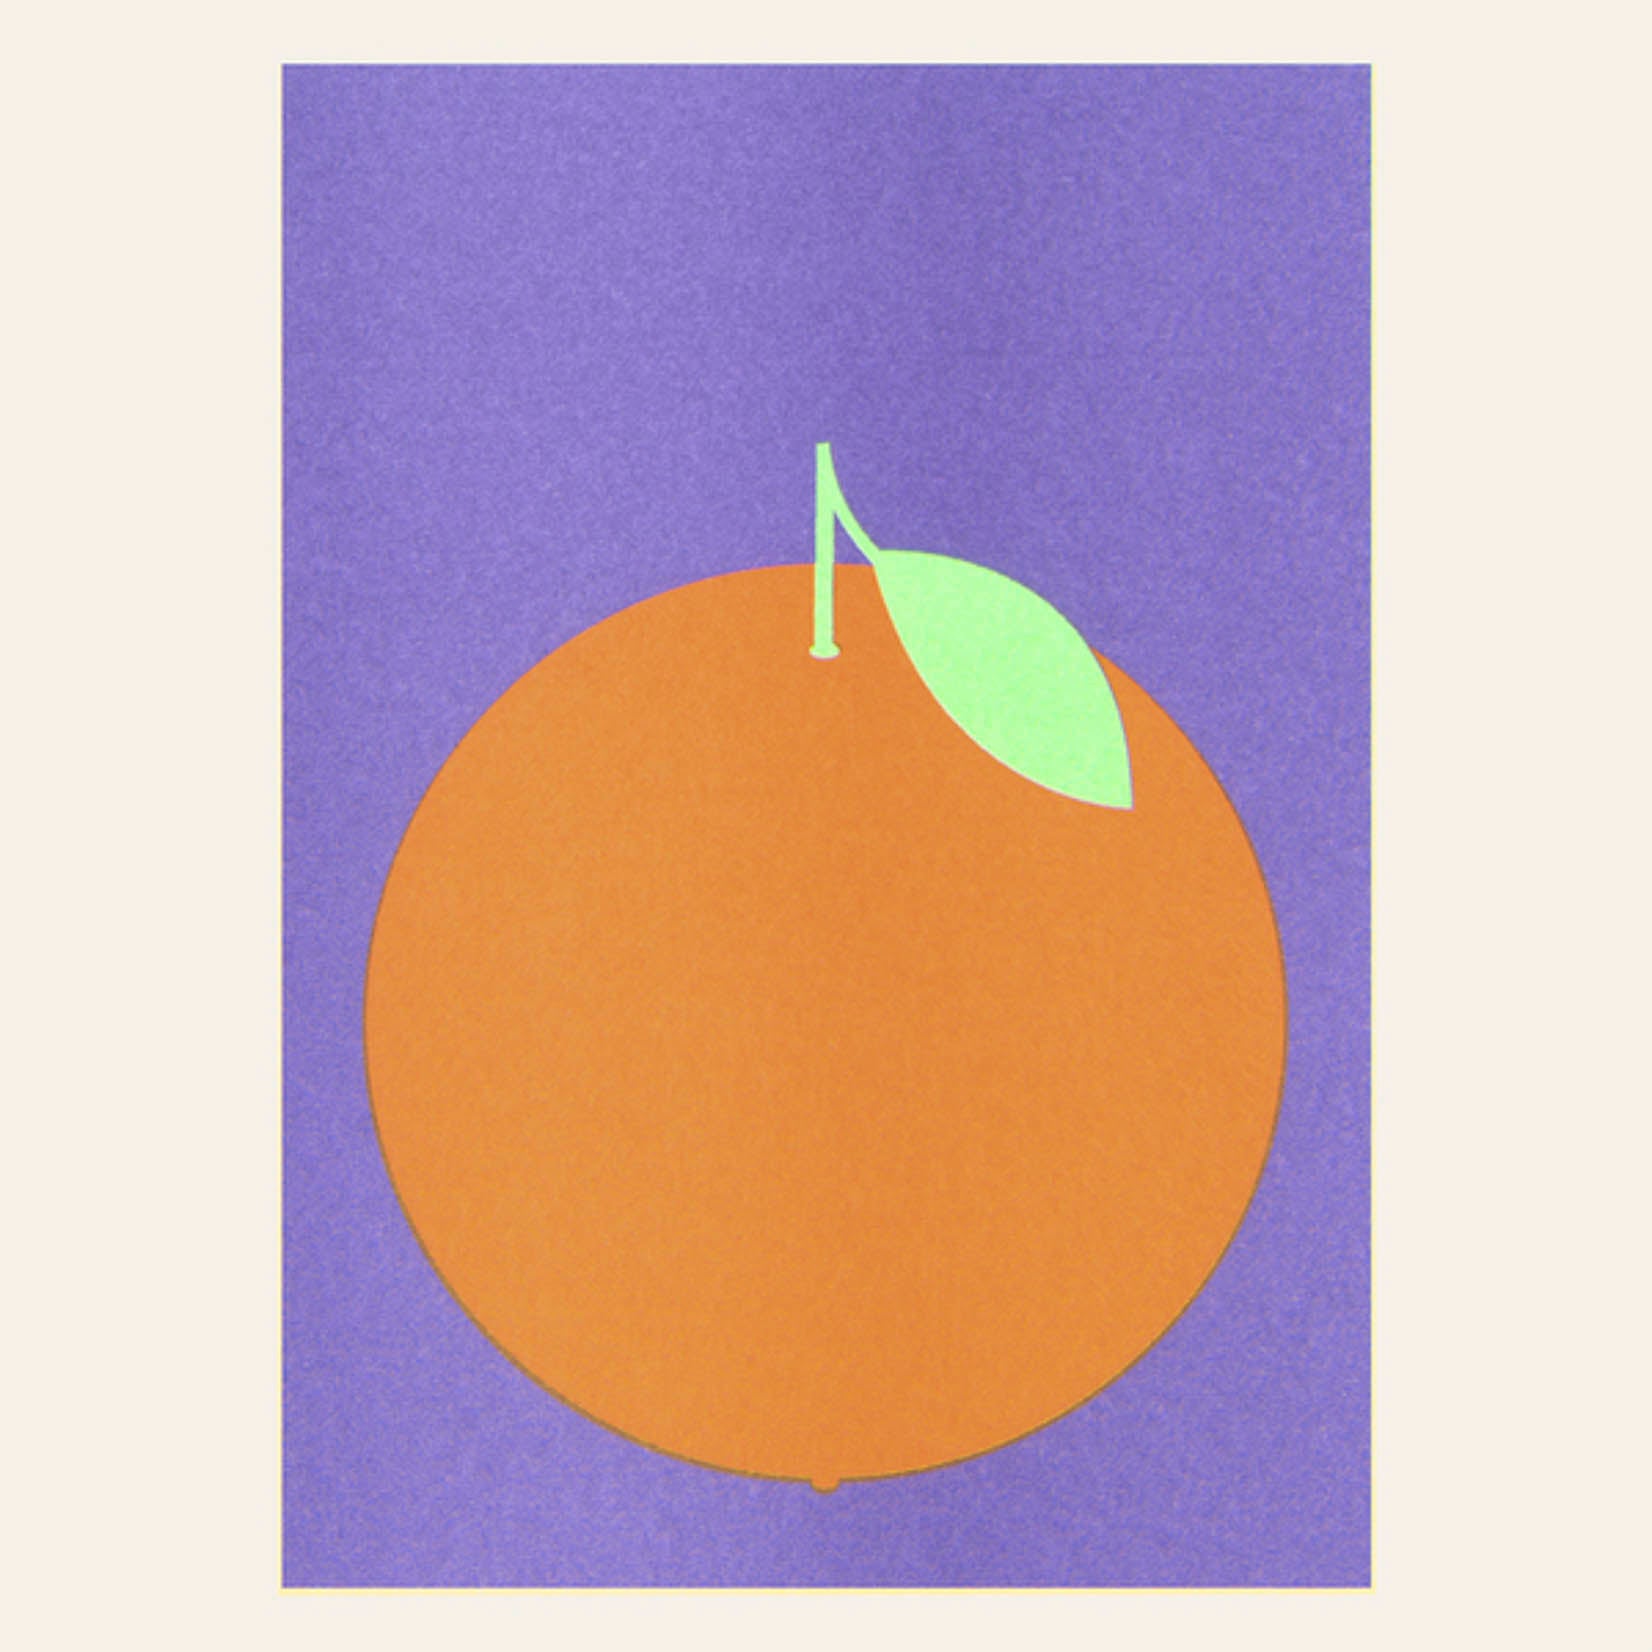 Herr & Frau Rio Karte Postkarte Risographie Riso Druck Orange Orange Zitrusfrucht Obst